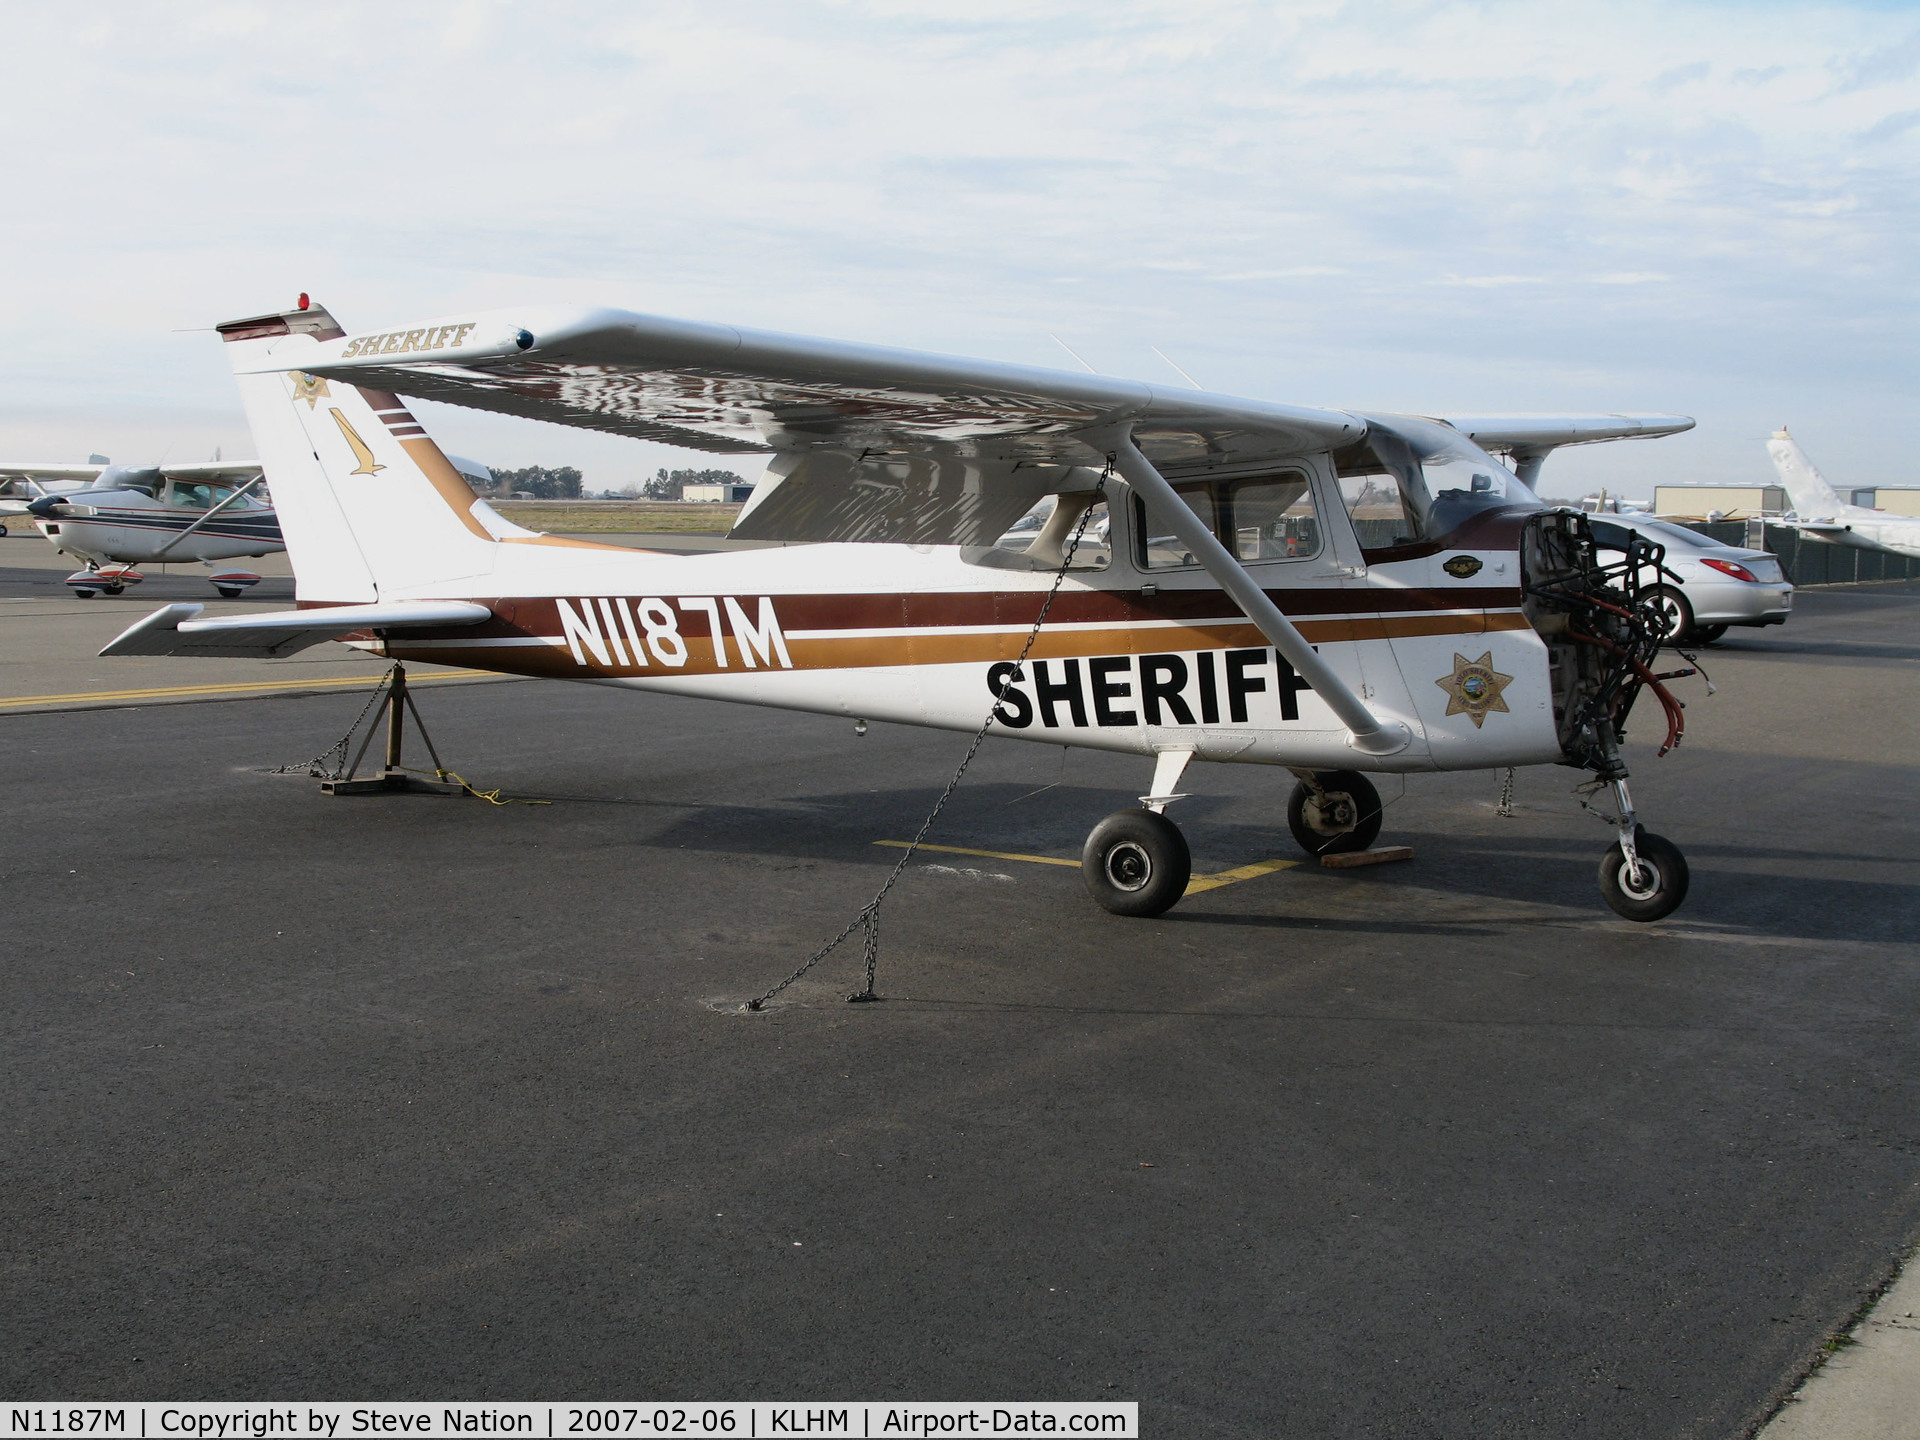 N1187M, 1970 Cessna 172K Skyhawk C/N 17258687, Yolo County SHERIFF Department 1970 Cessna 172K in for maintenance @ Lincoln Regional Airport (Karl Harder Field), CA minus engine